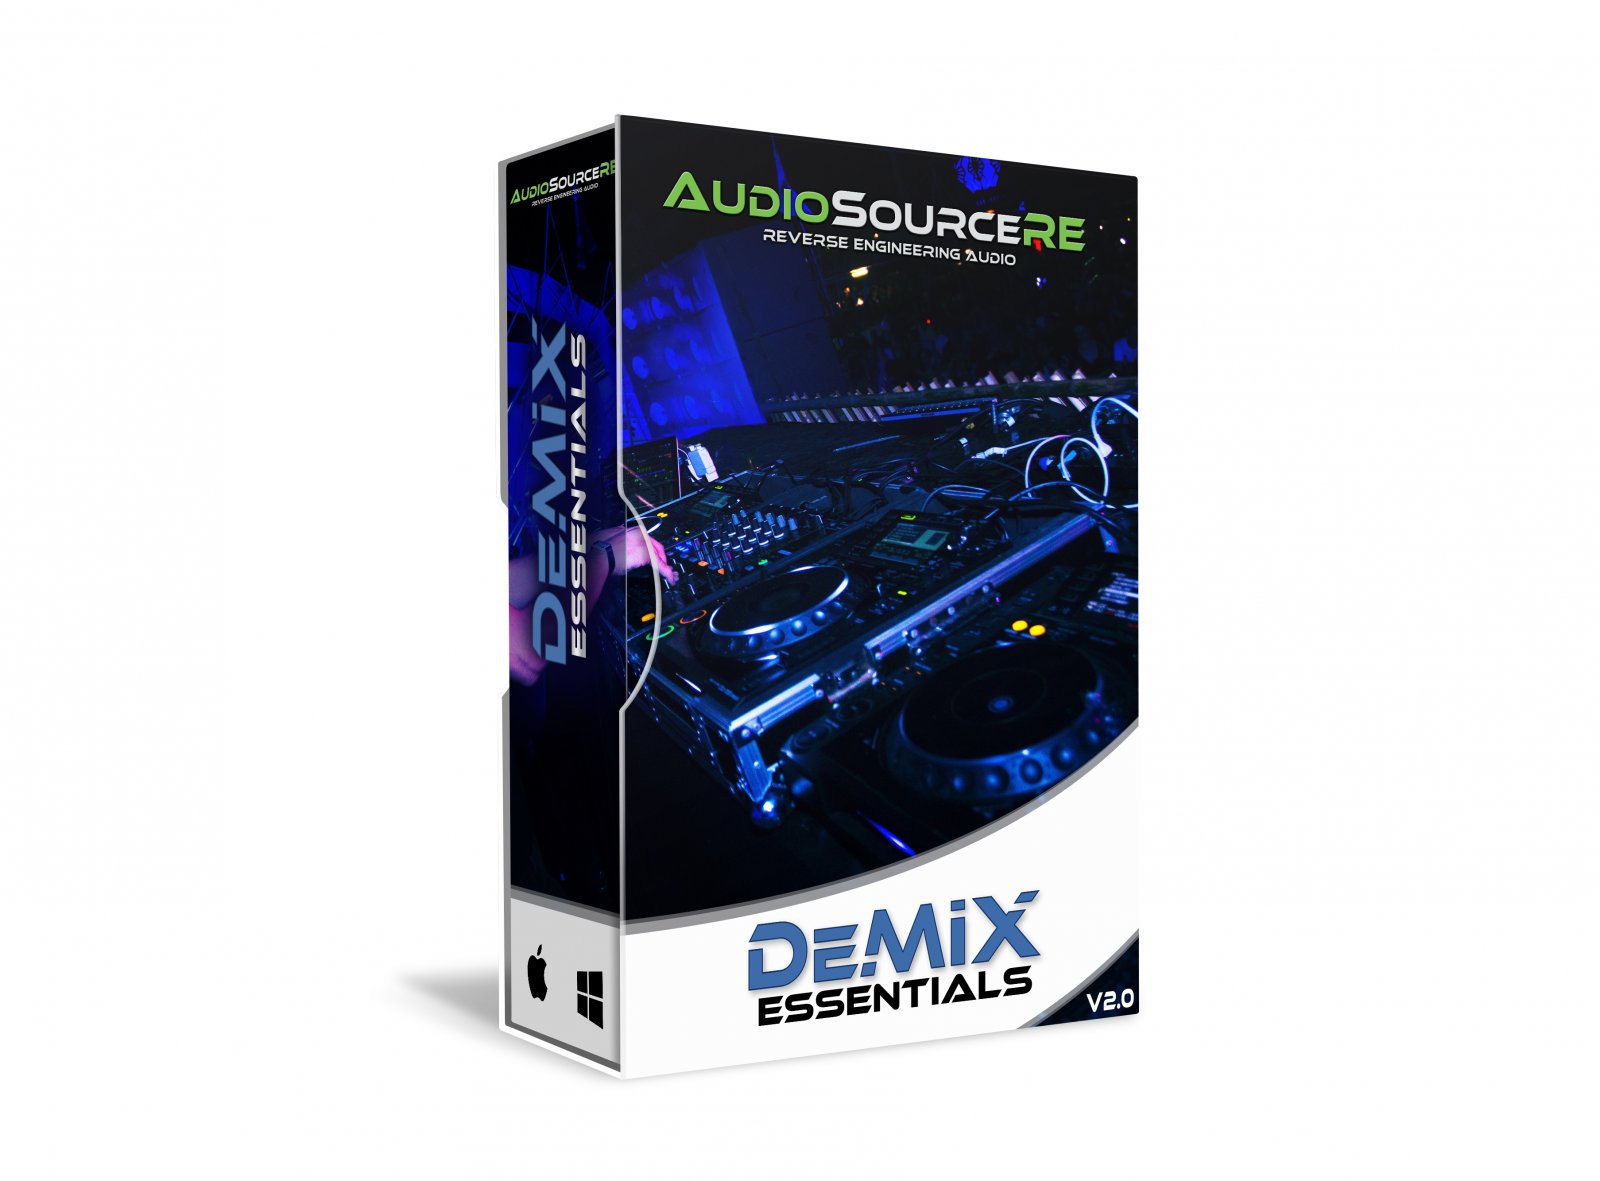 audiosourcere demix service